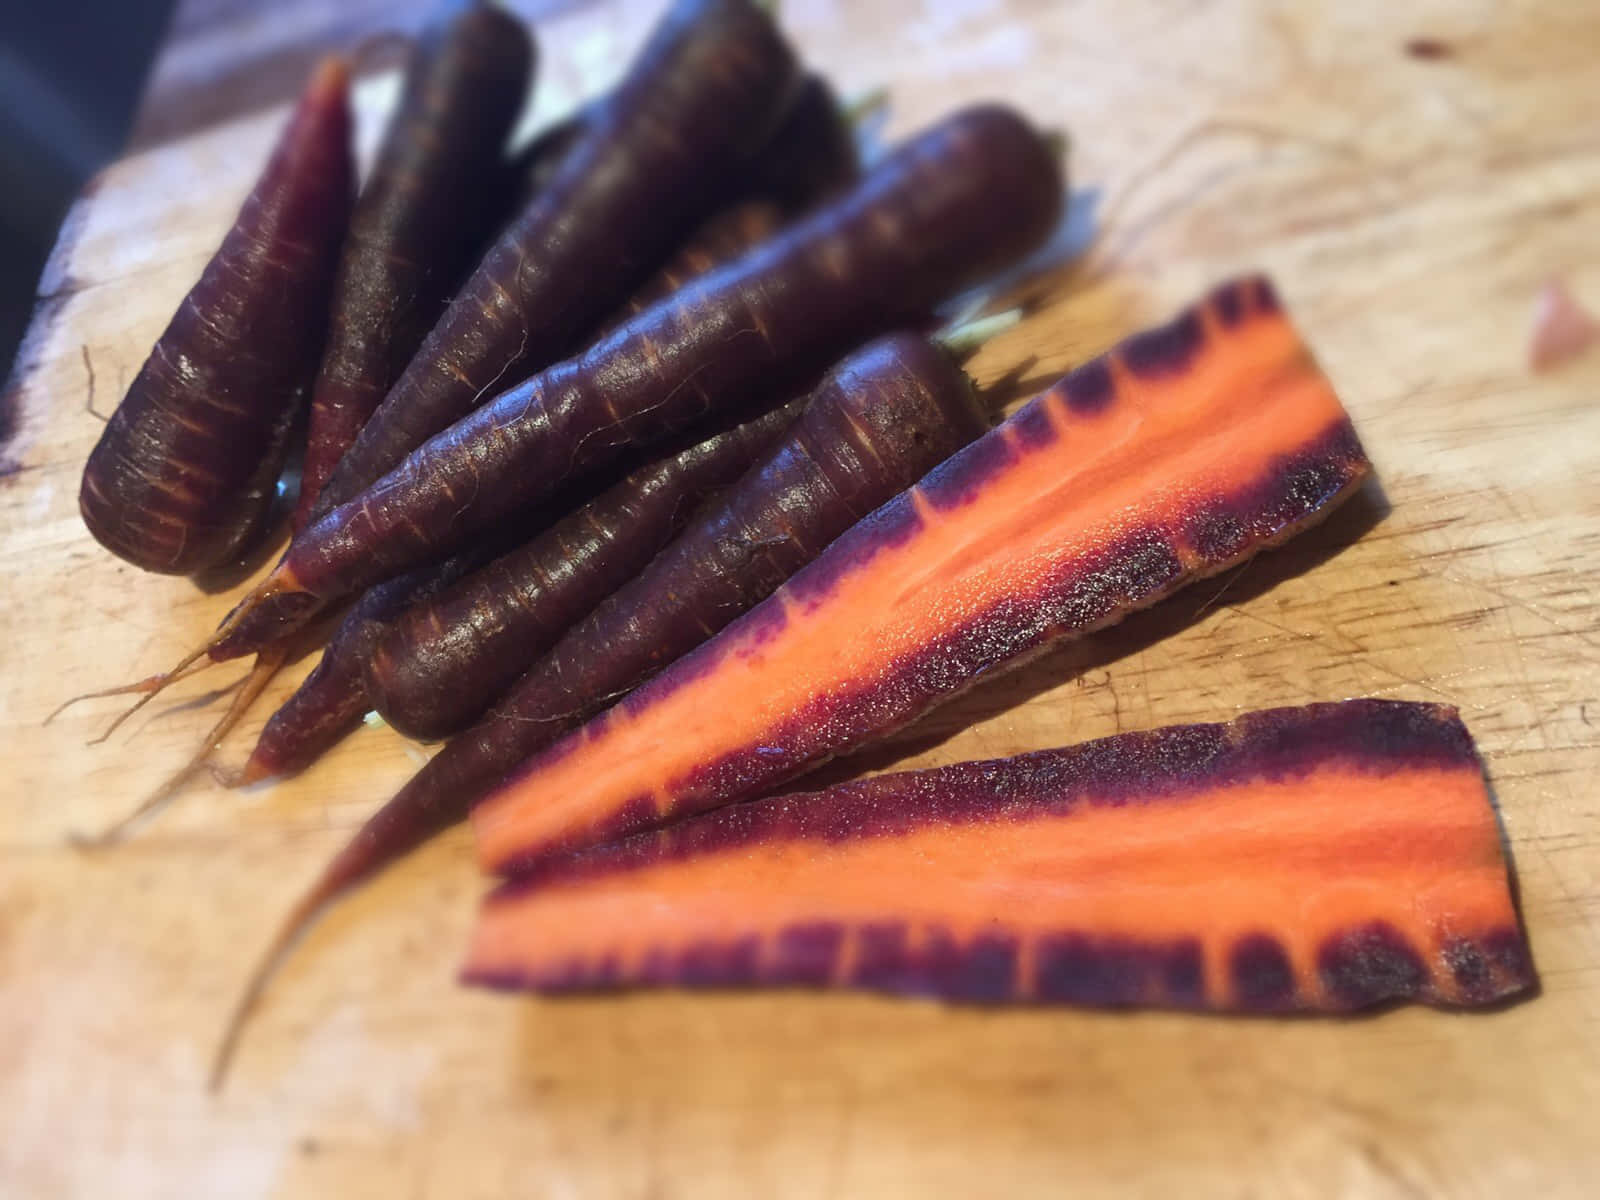 Delicious Purple Carrots Wallpaper